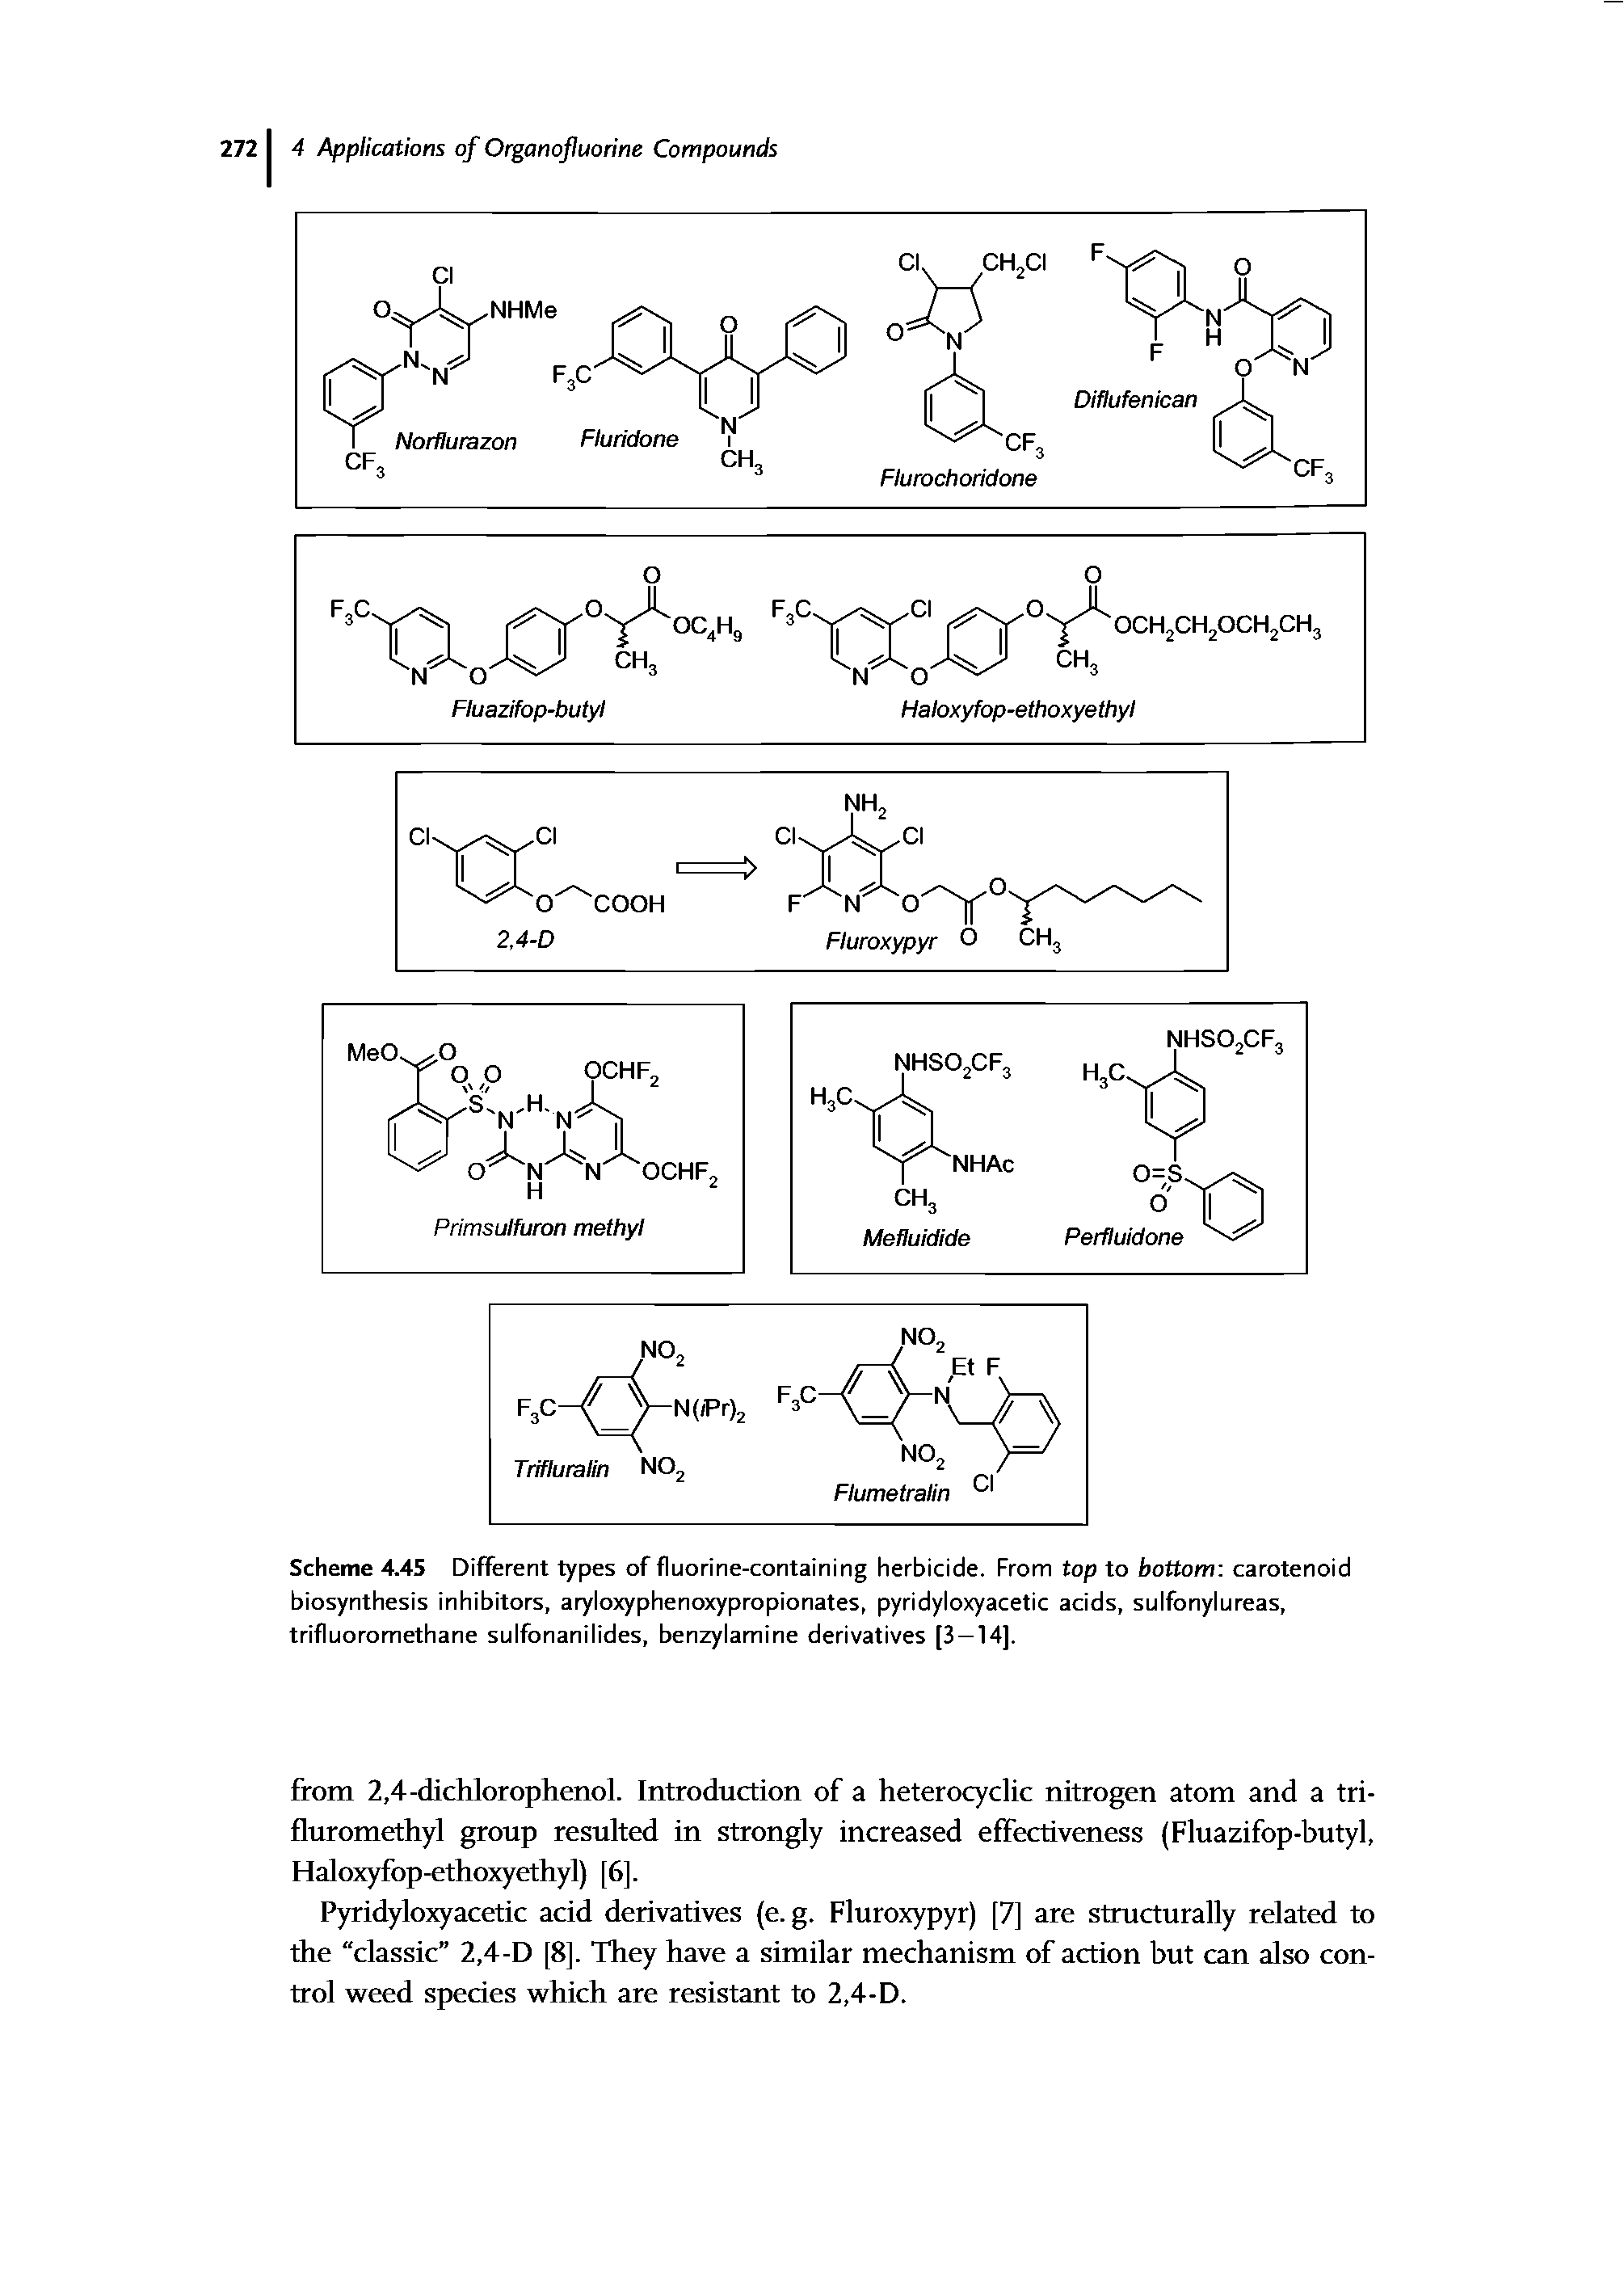 Scheme 4.45 Different types of fluorine-containing herbicide. From top to bottom carotenoid biosynthesis inhibitors, aryloxyphenoxypropionates, pyridyloxyacetic acids, sulfonylureas, trifluoromethane sulfonanilides, benzylamine derivatives [3 — 14].